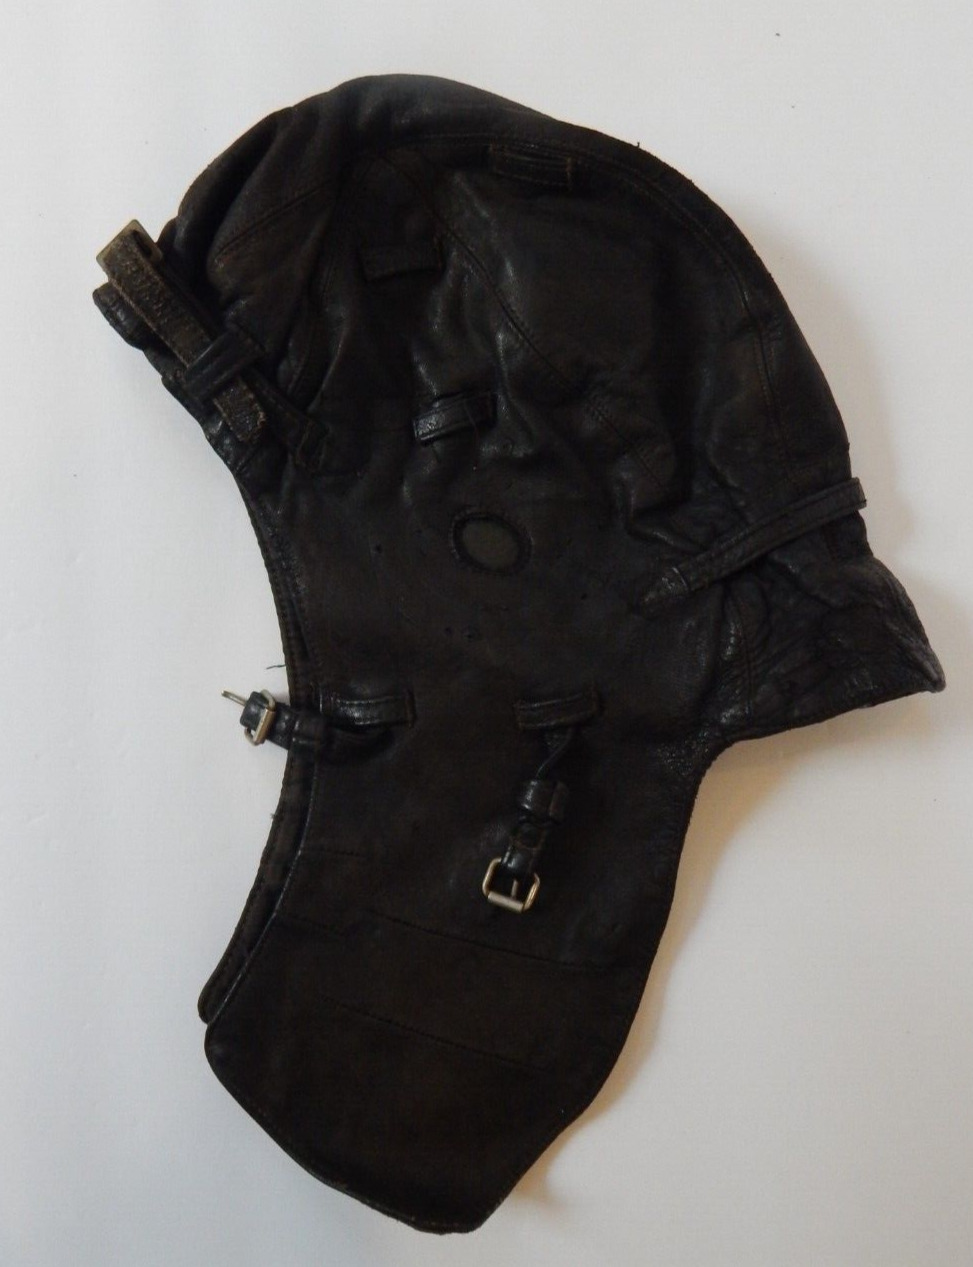 VINTAGE 1940s - 50s Black Leather Pilot's Helmet - Original Lining, Buckles